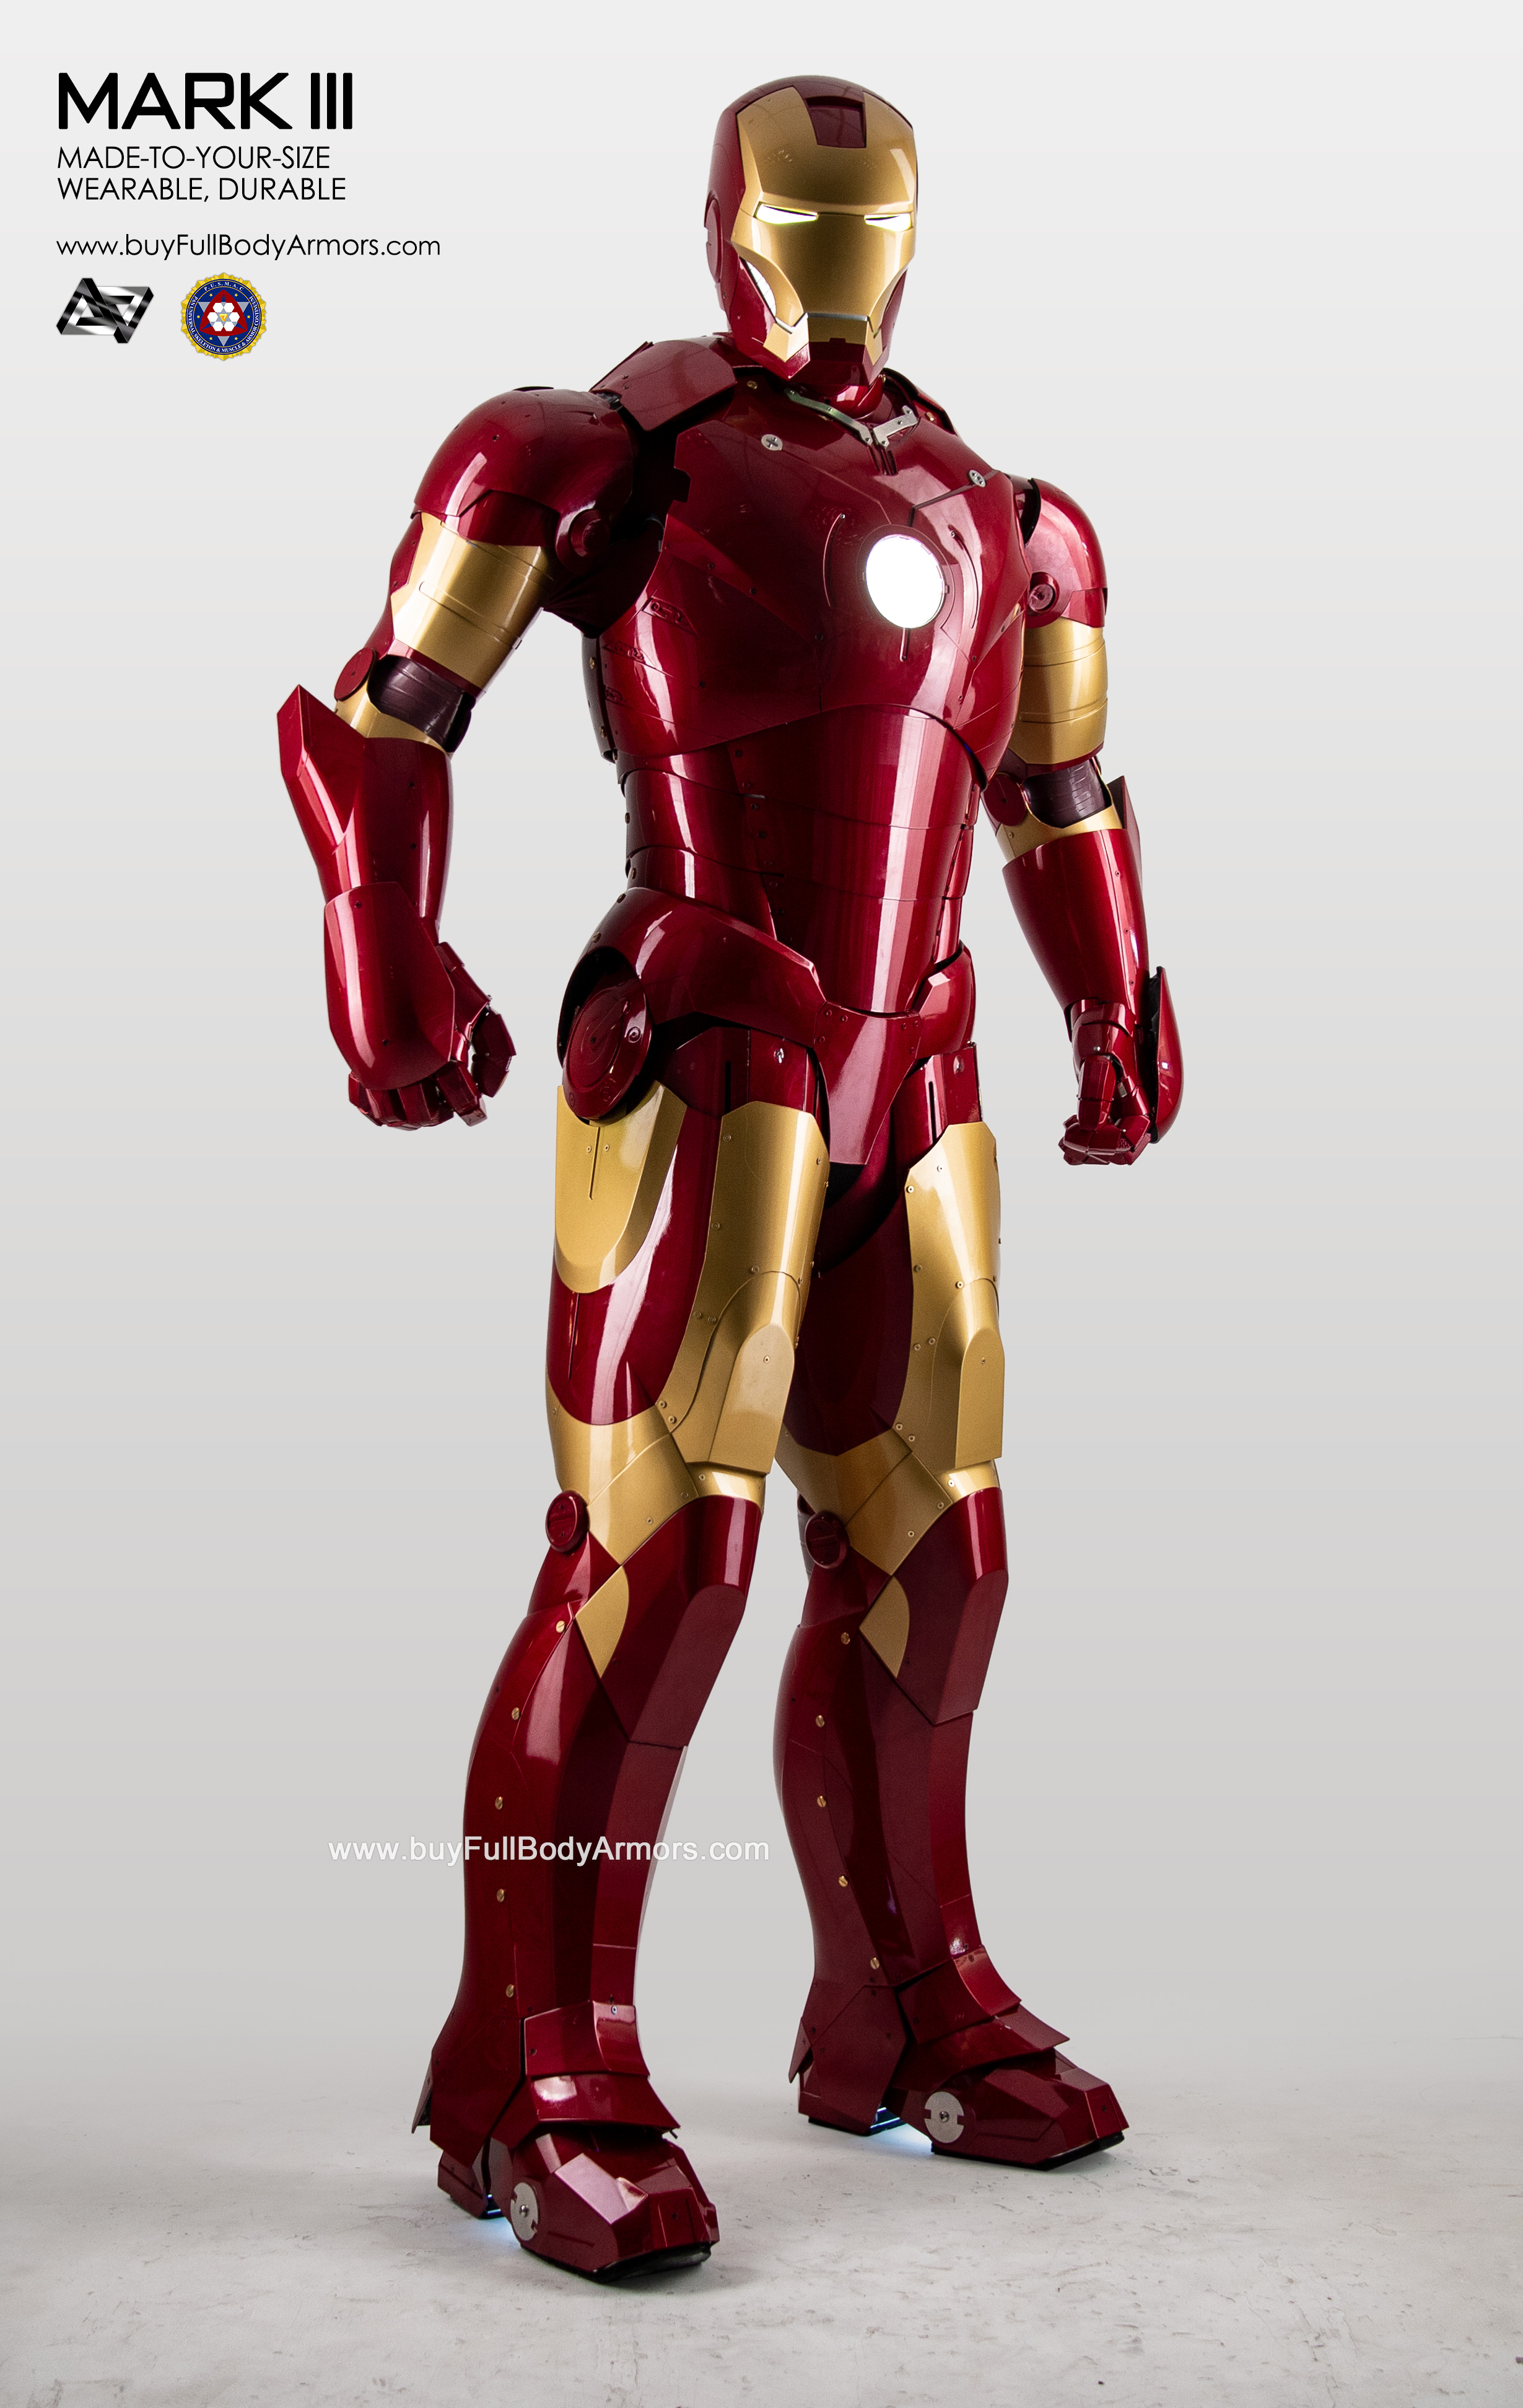 Buy Iron Man suit, Halo Master Chief armor, Batman costume, Star Wars armor - Buy the Wearable Iron Man Armor Mark 3 (III) Suit Costume BuyFullBodyArmors.com